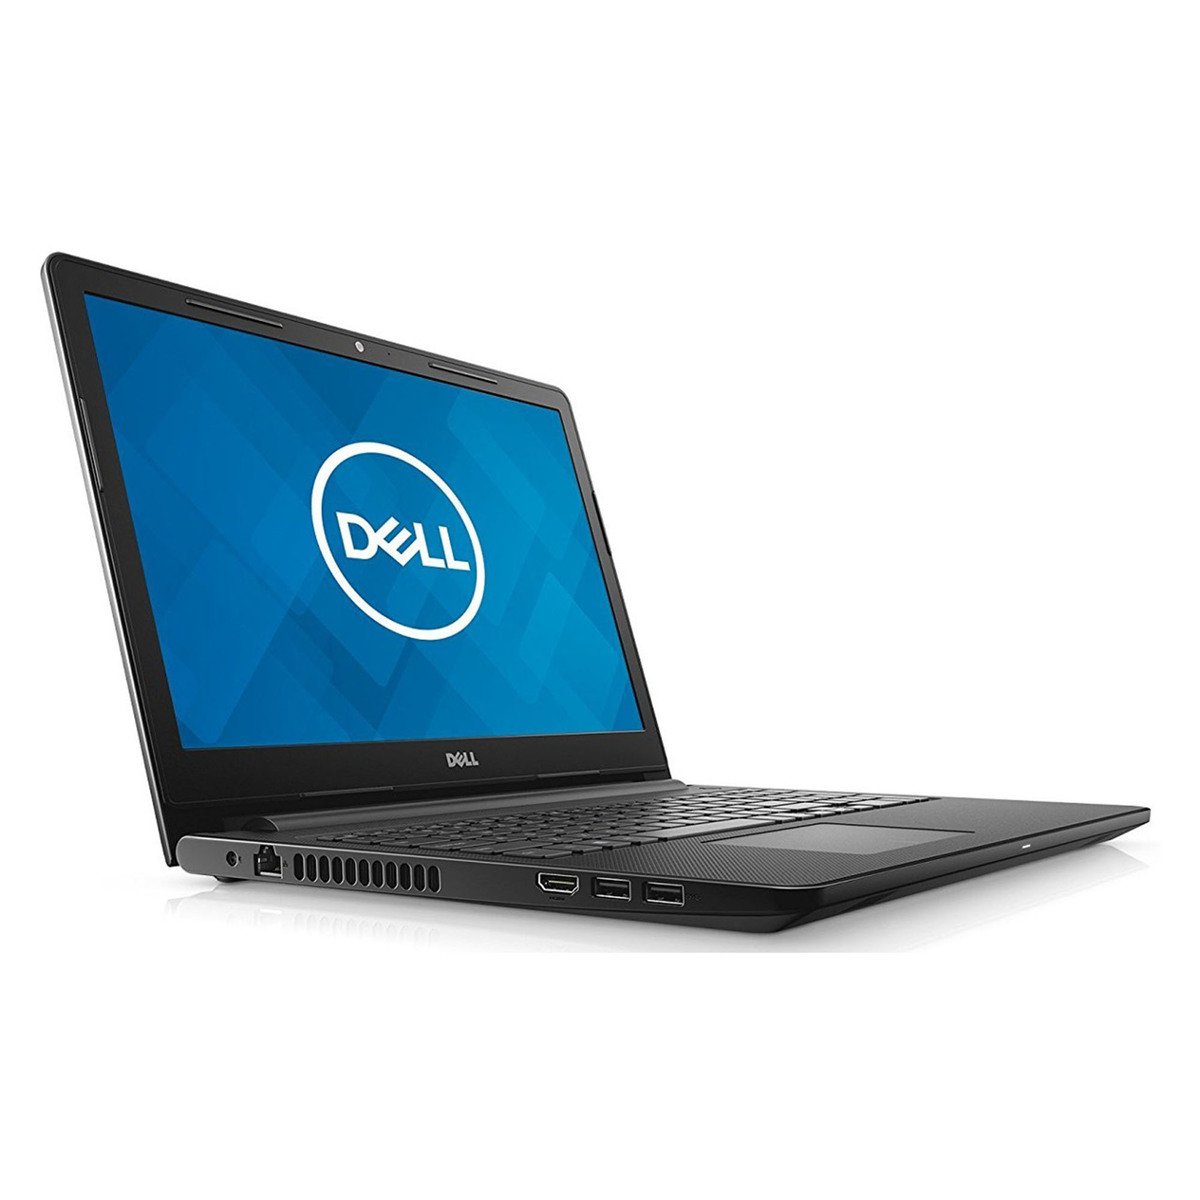 Dell Notebook INSPIRON 3565-INS-1272 A9-9425,500GB HDD,4GB RAM, Black